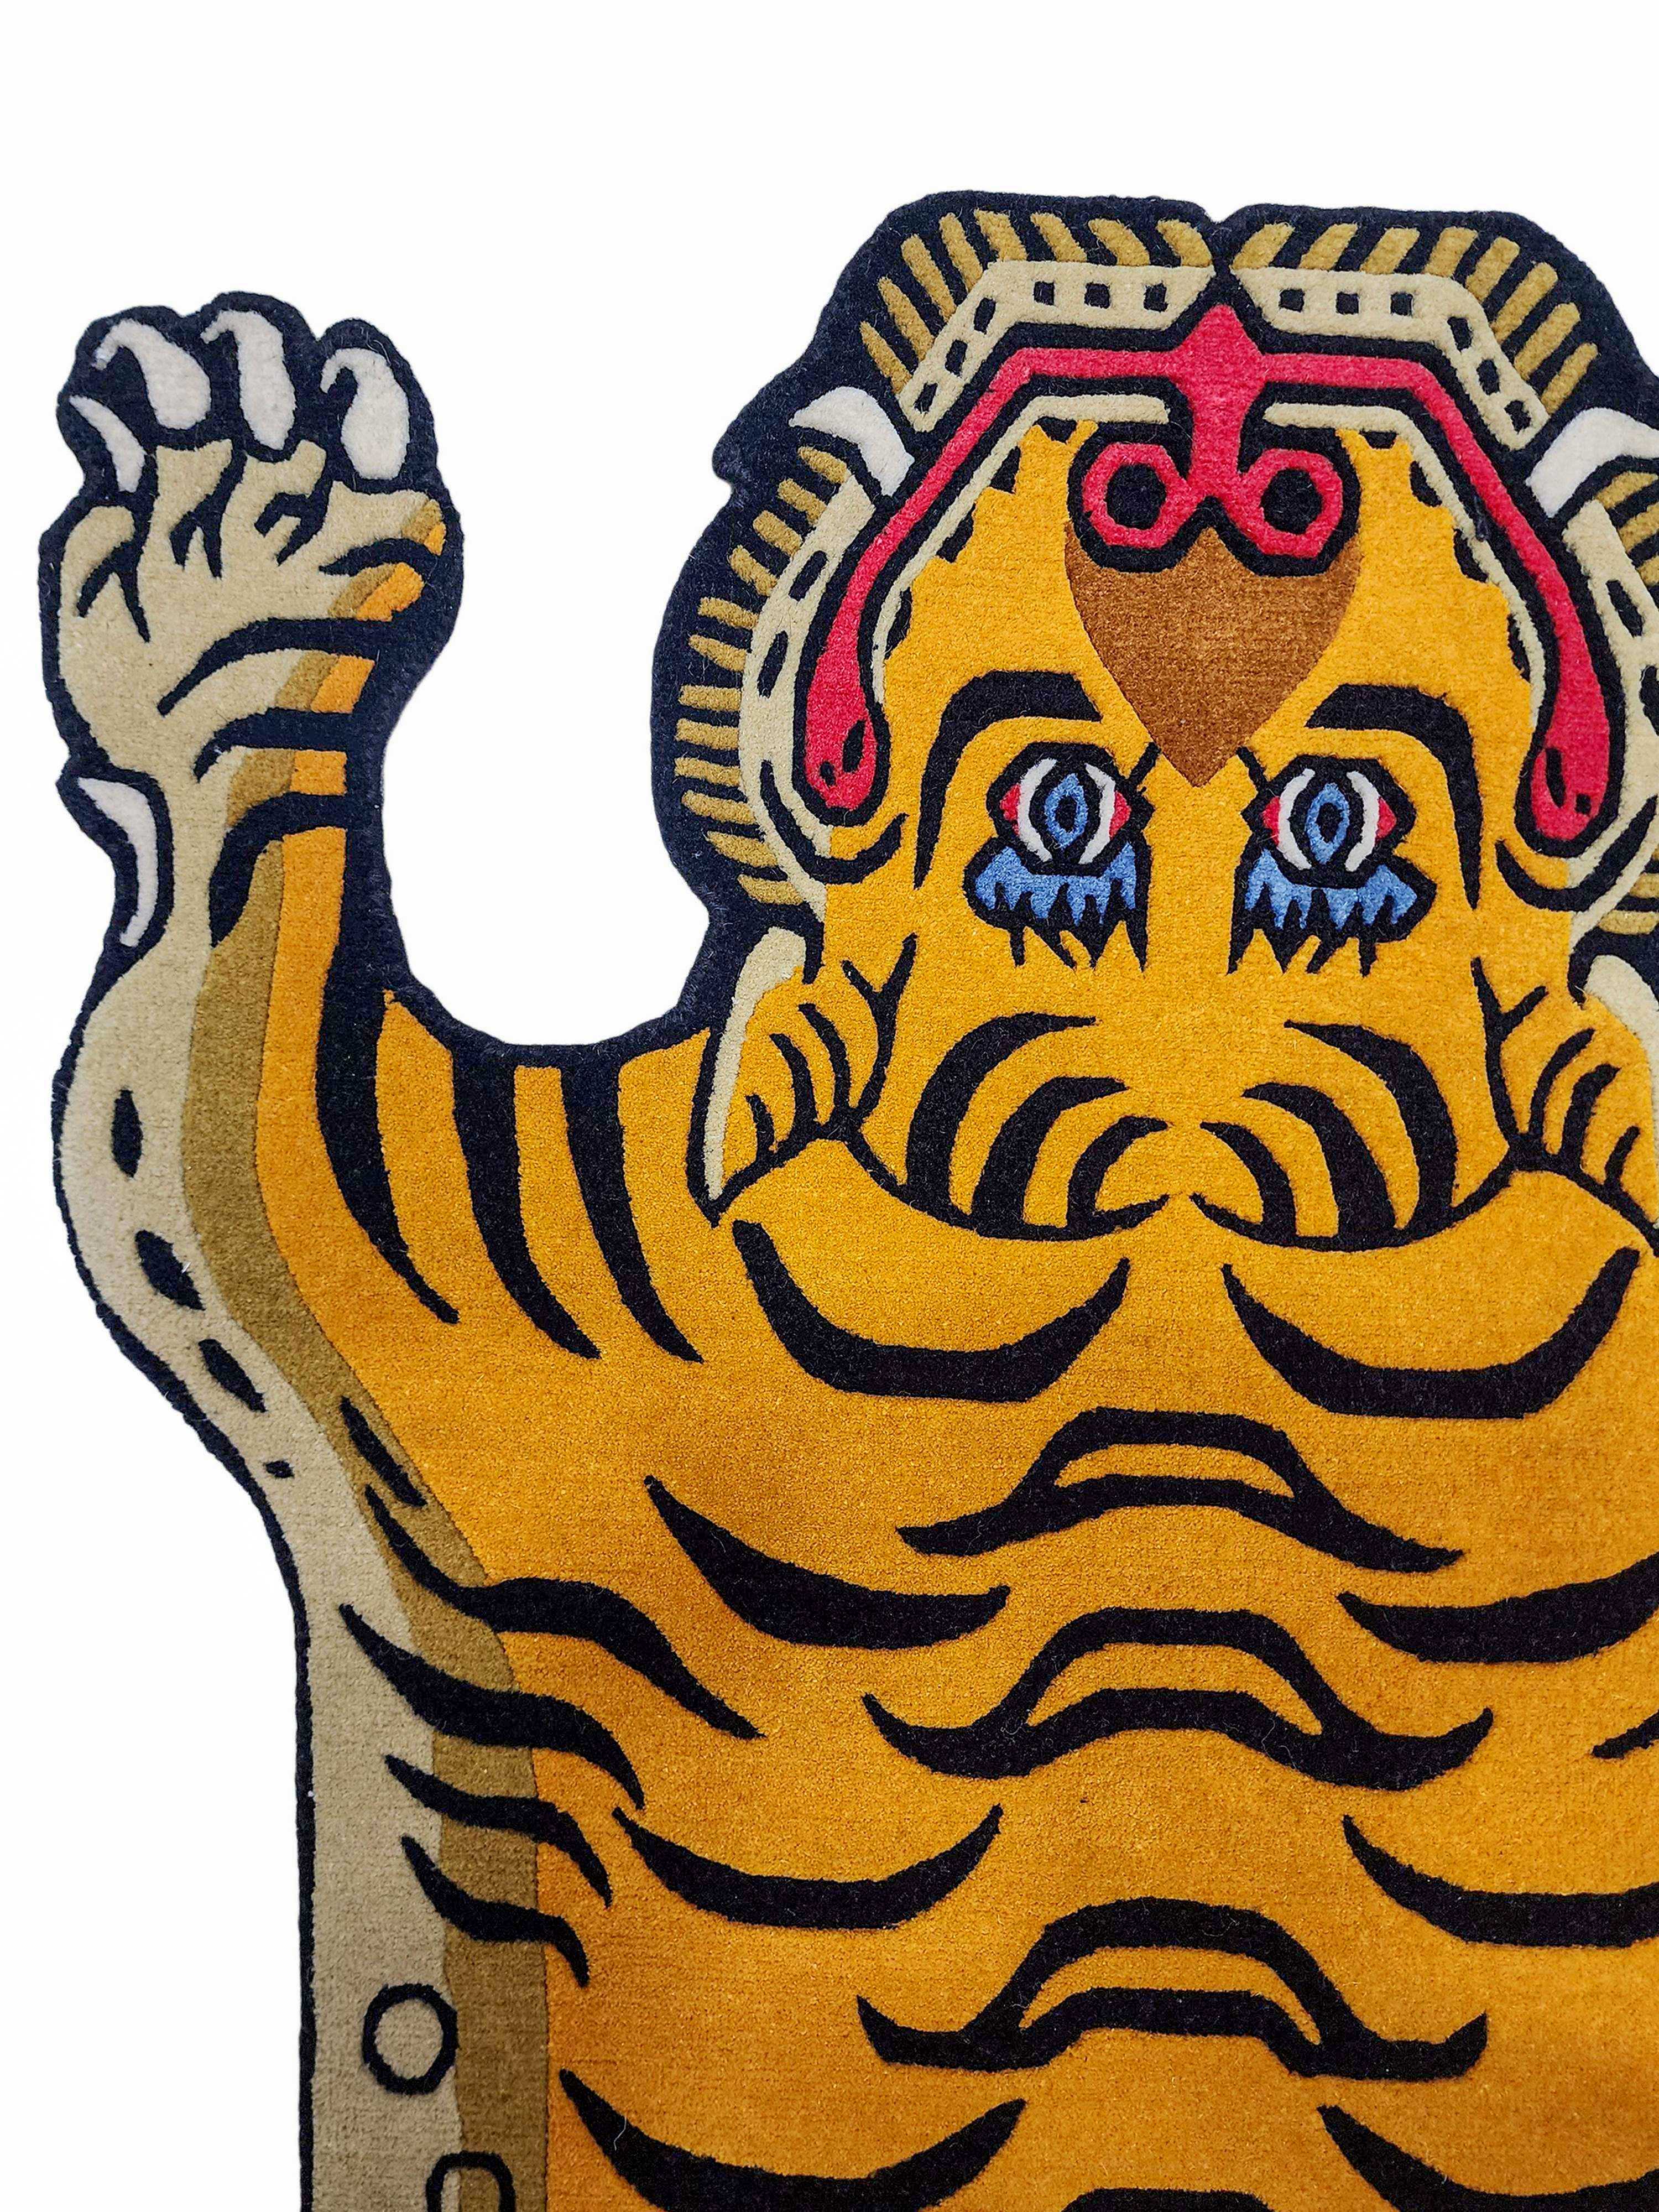 tiger Design Rug/carpet, Handwoven In Nepal, Golden Yellow Color, Medium Size